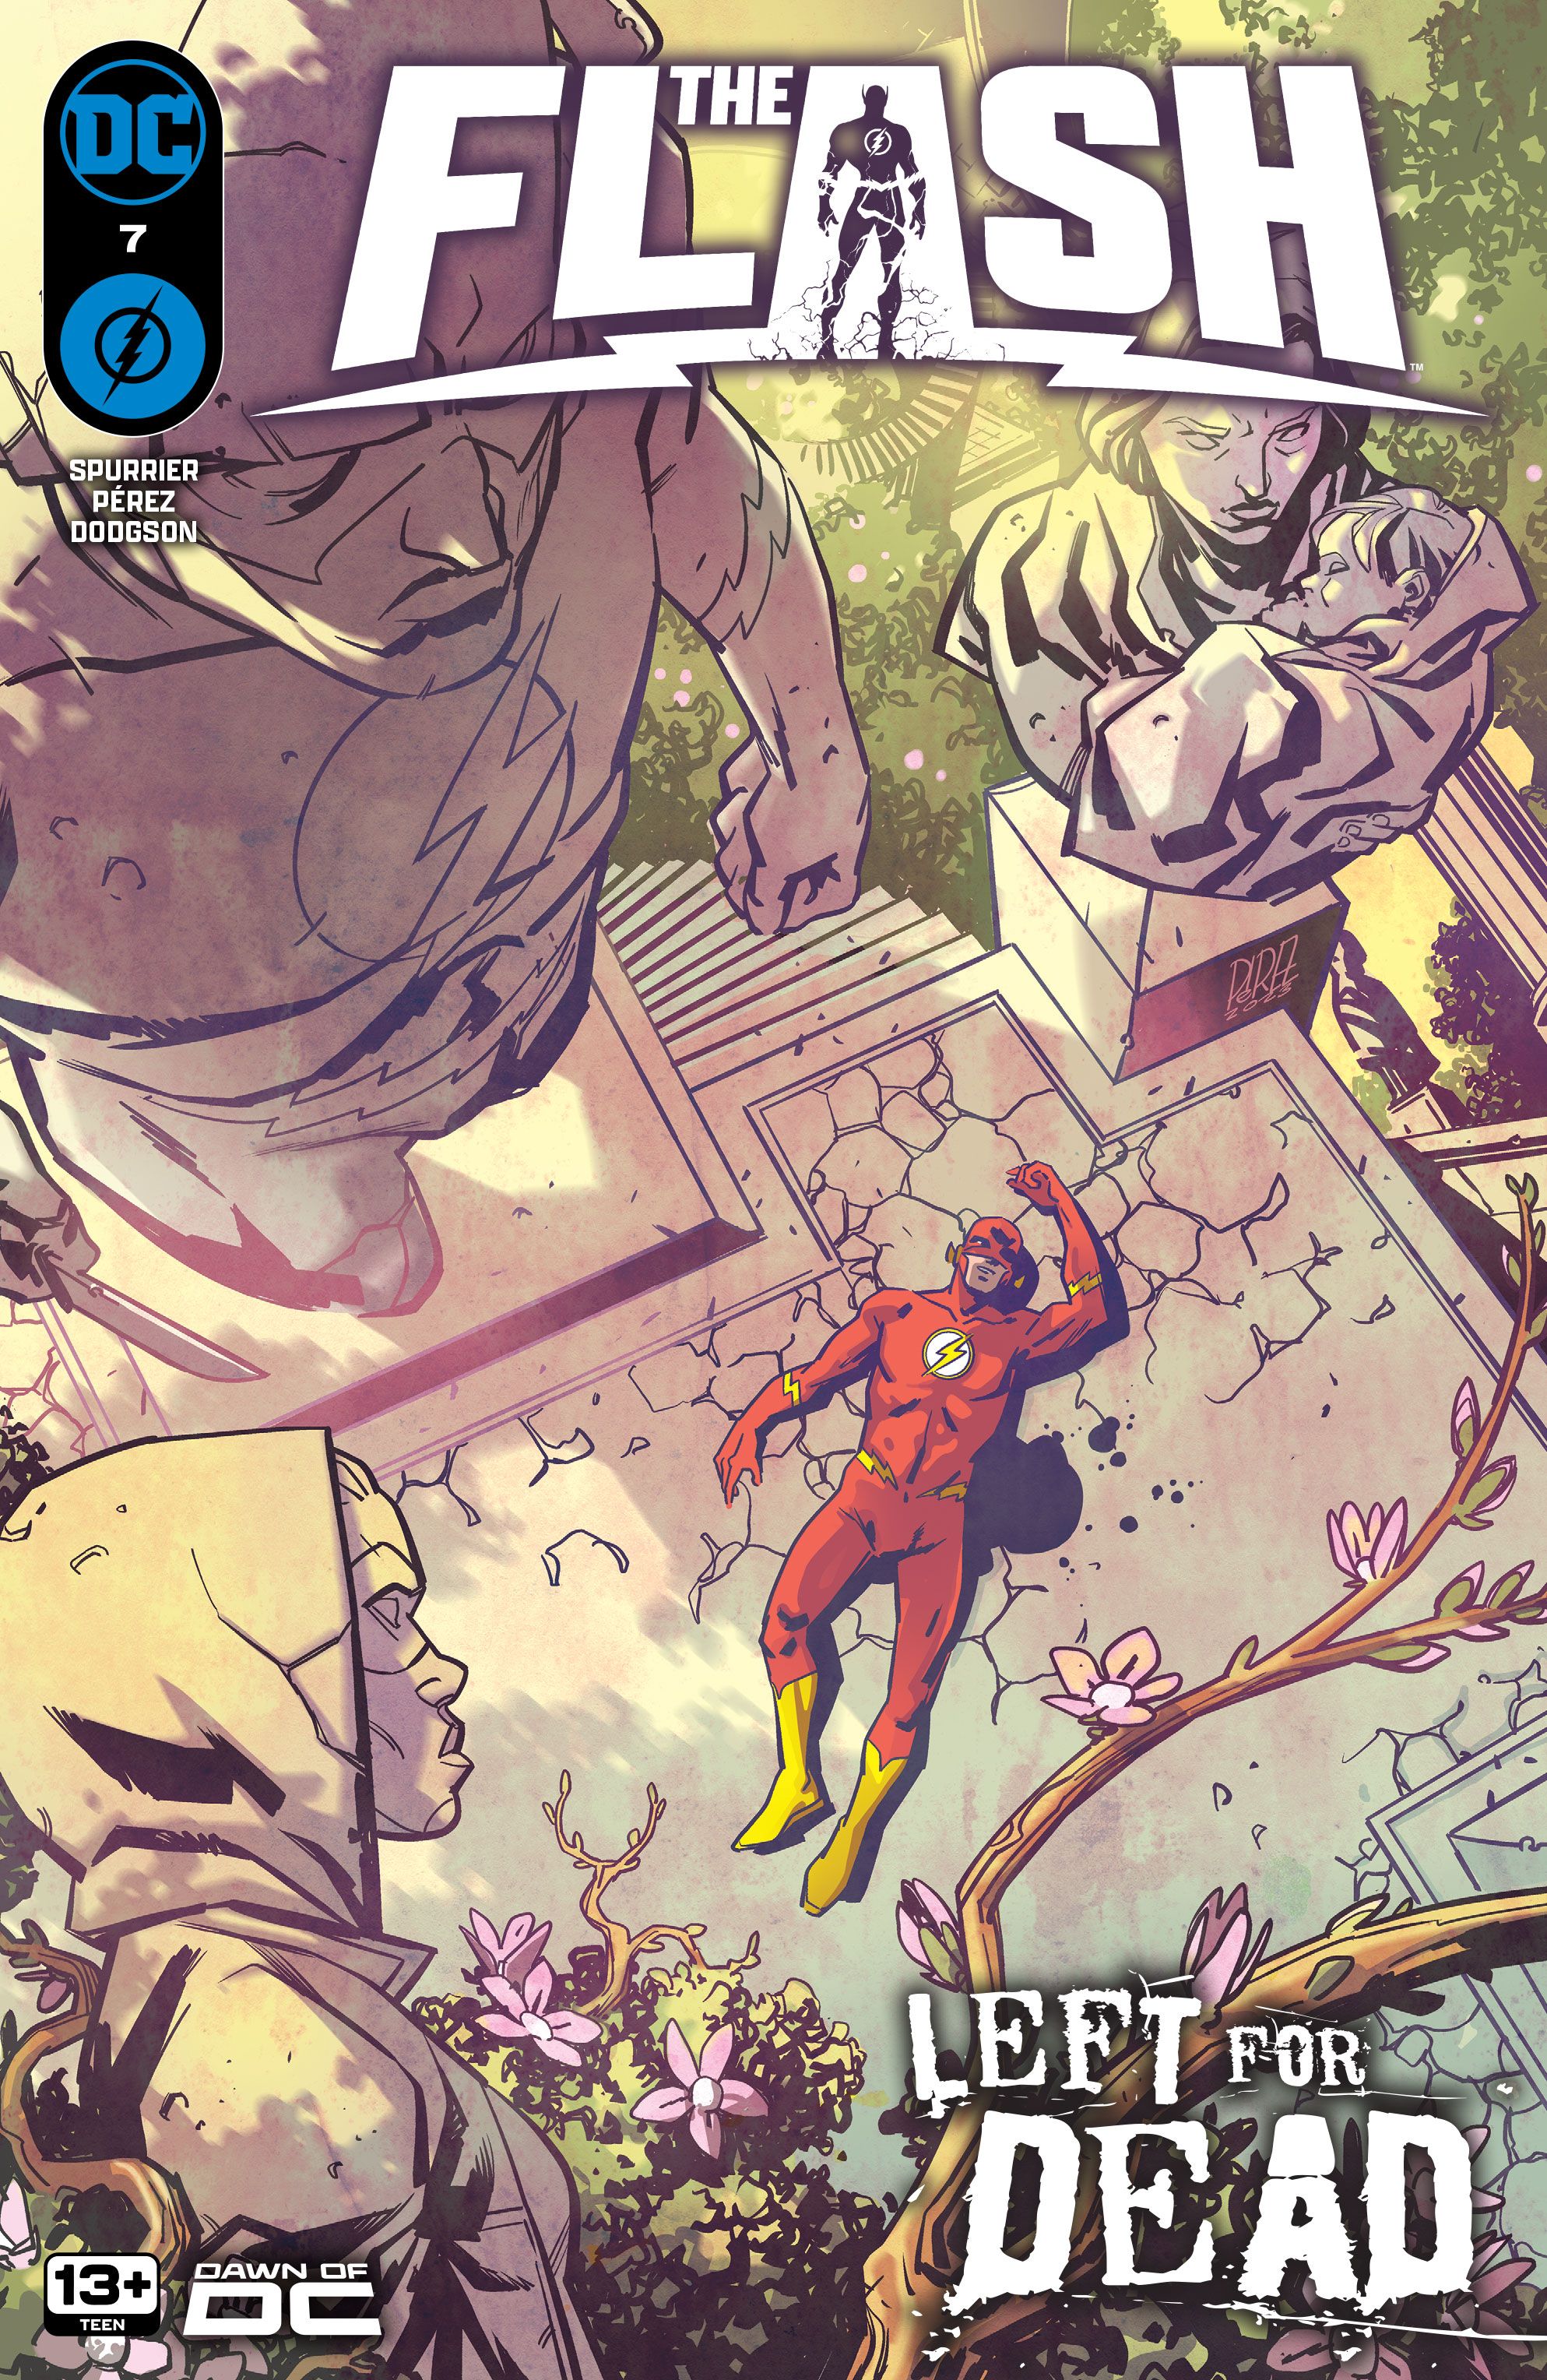 The Flash 7 Main Cover: Flash lies unconscious in an idyllic garden.